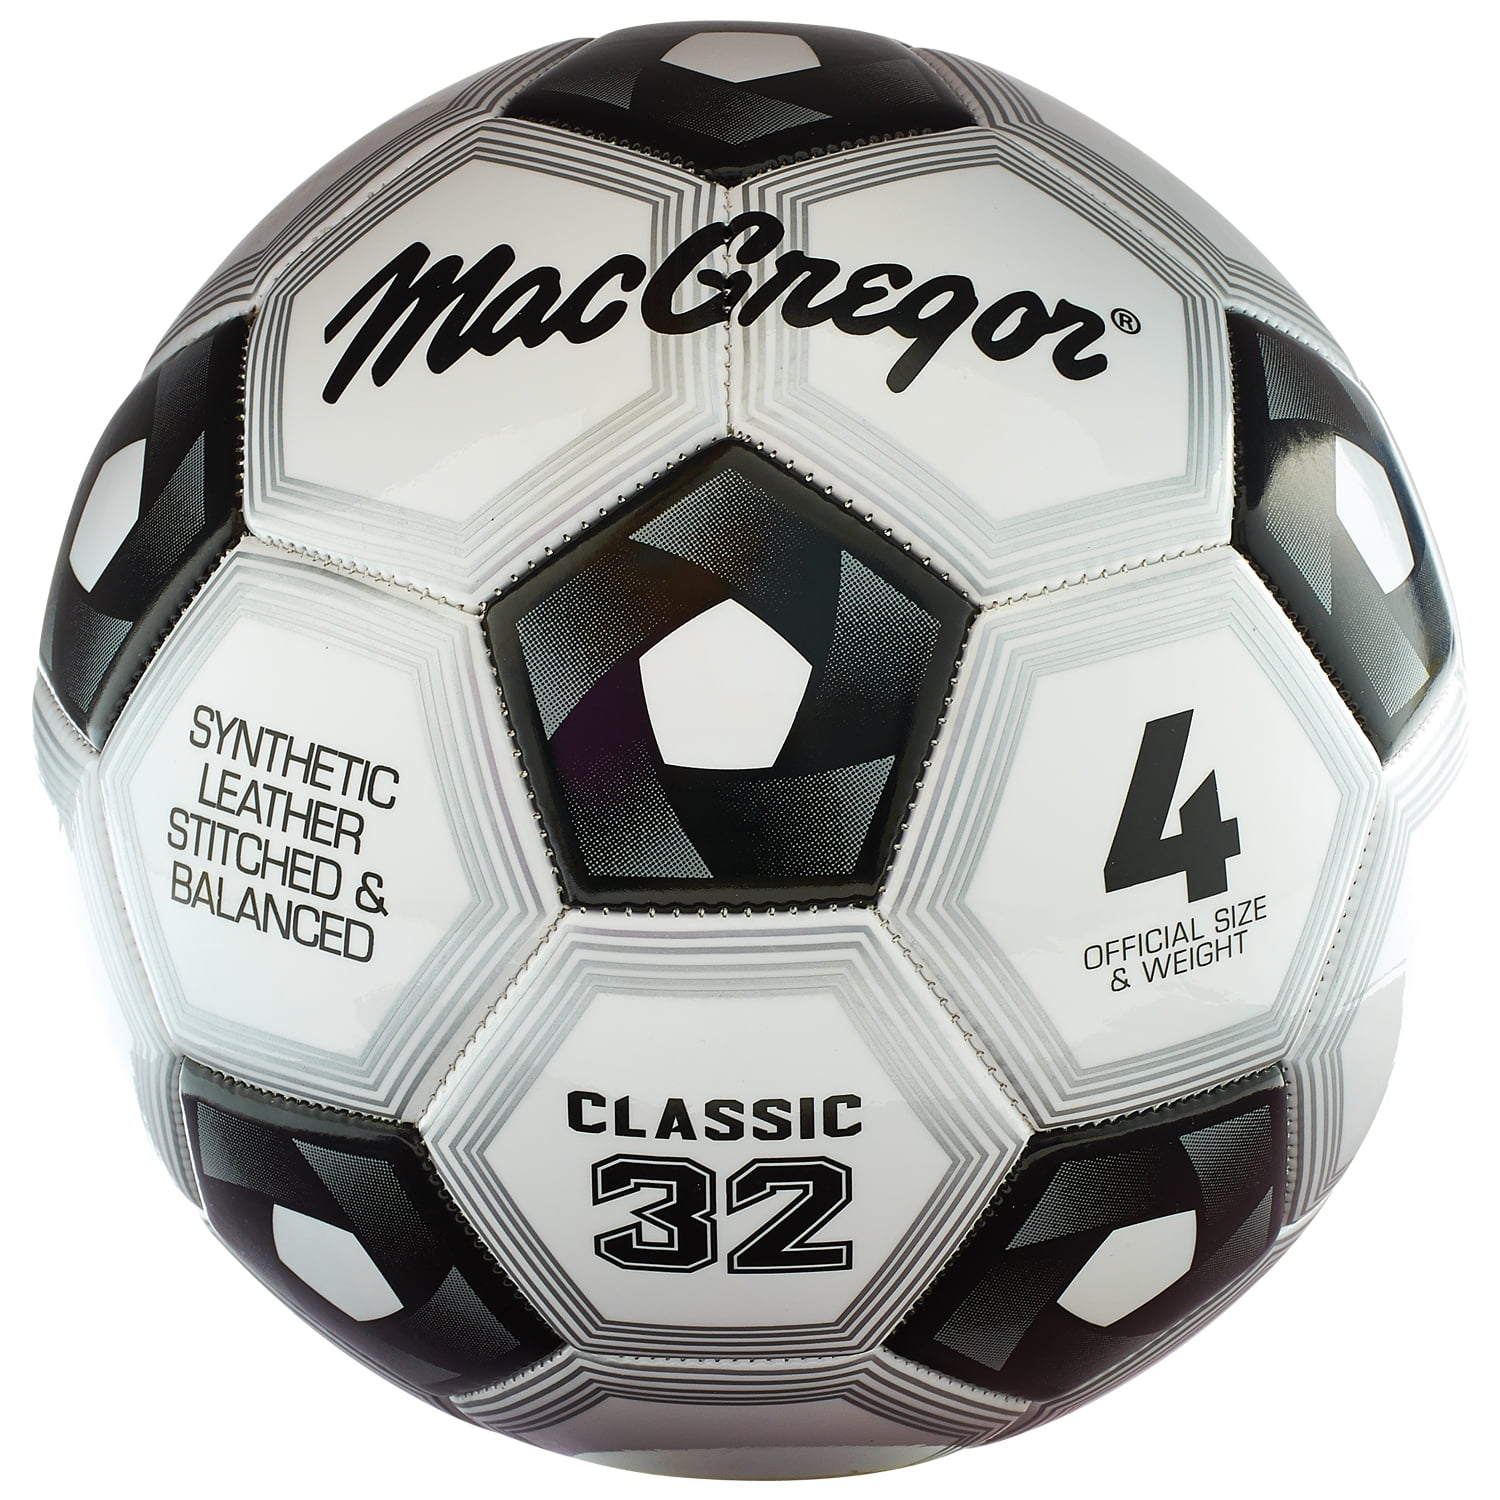 MacGregor Rubber Soccer Ball Size 3 